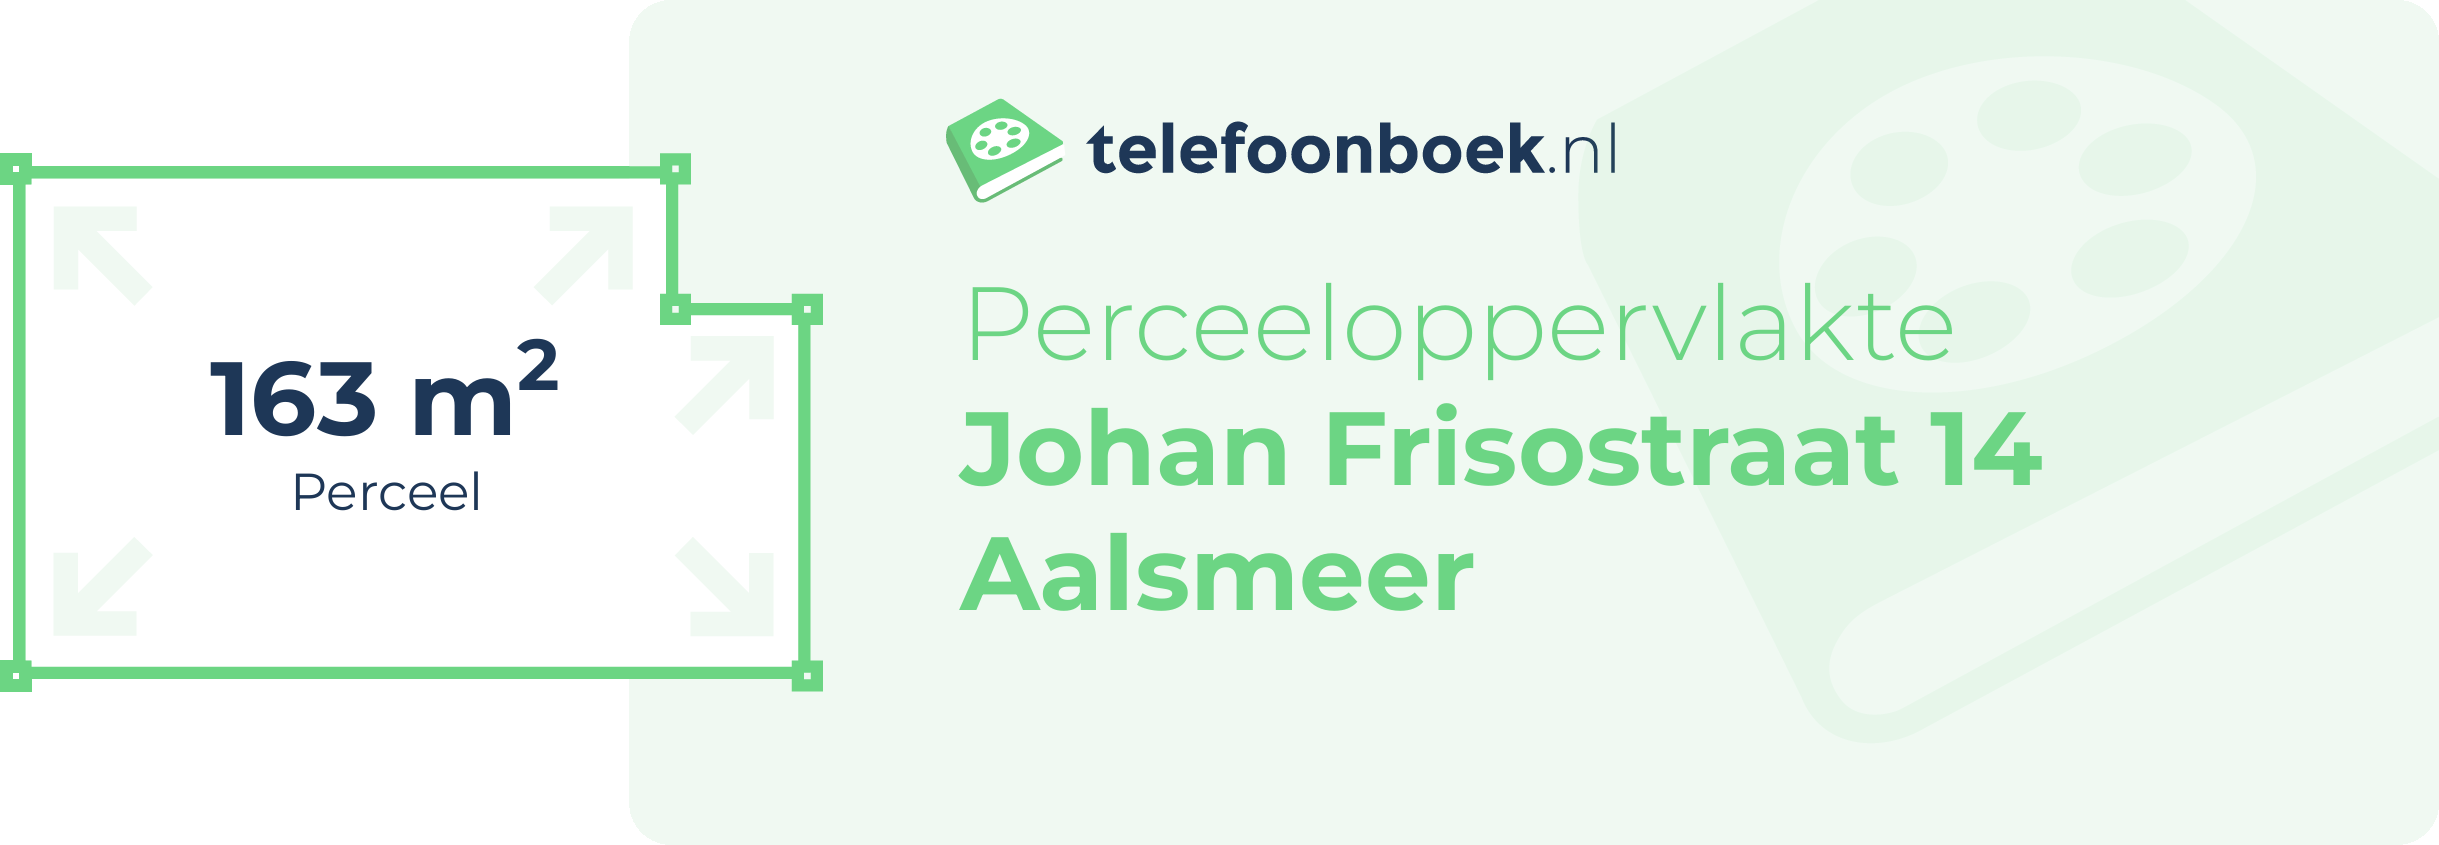 Perceeloppervlakte Johan Frisostraat 14 Aalsmeer